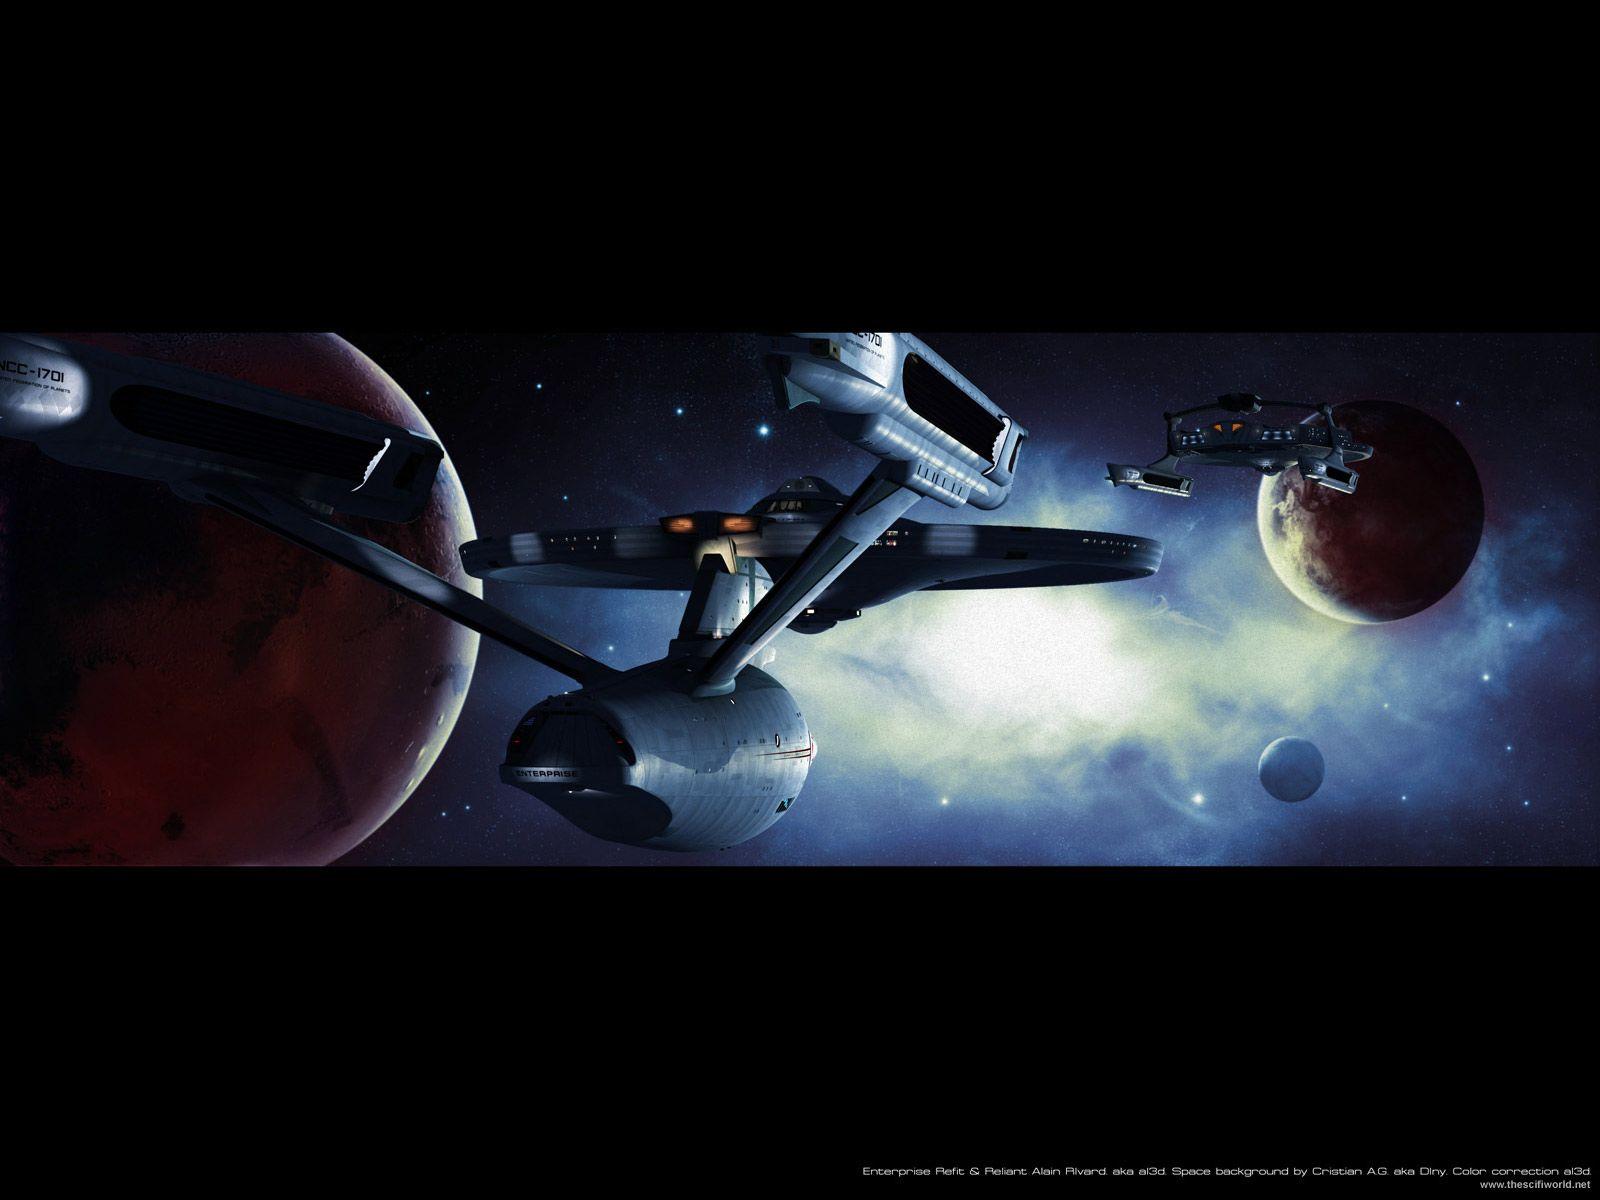 Star Trek Starships Enterprise and Reliant on patrol, free Star